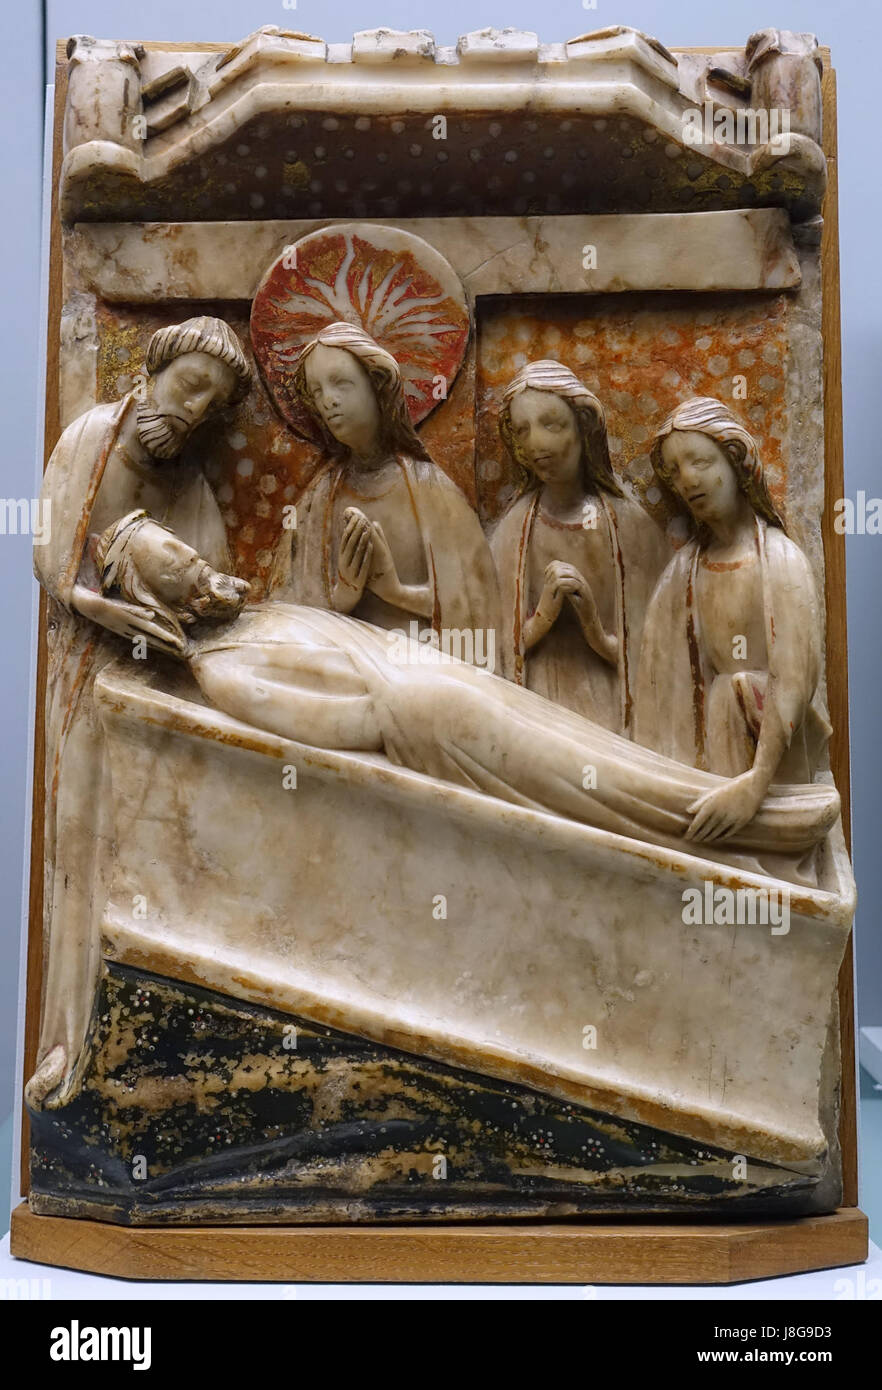 Entombment of Christ, England, c. 1380 1420, alabaster with polychrome   Cinquantenaire Museum   Brussels, Belgium   DSC08563 Stock Photo